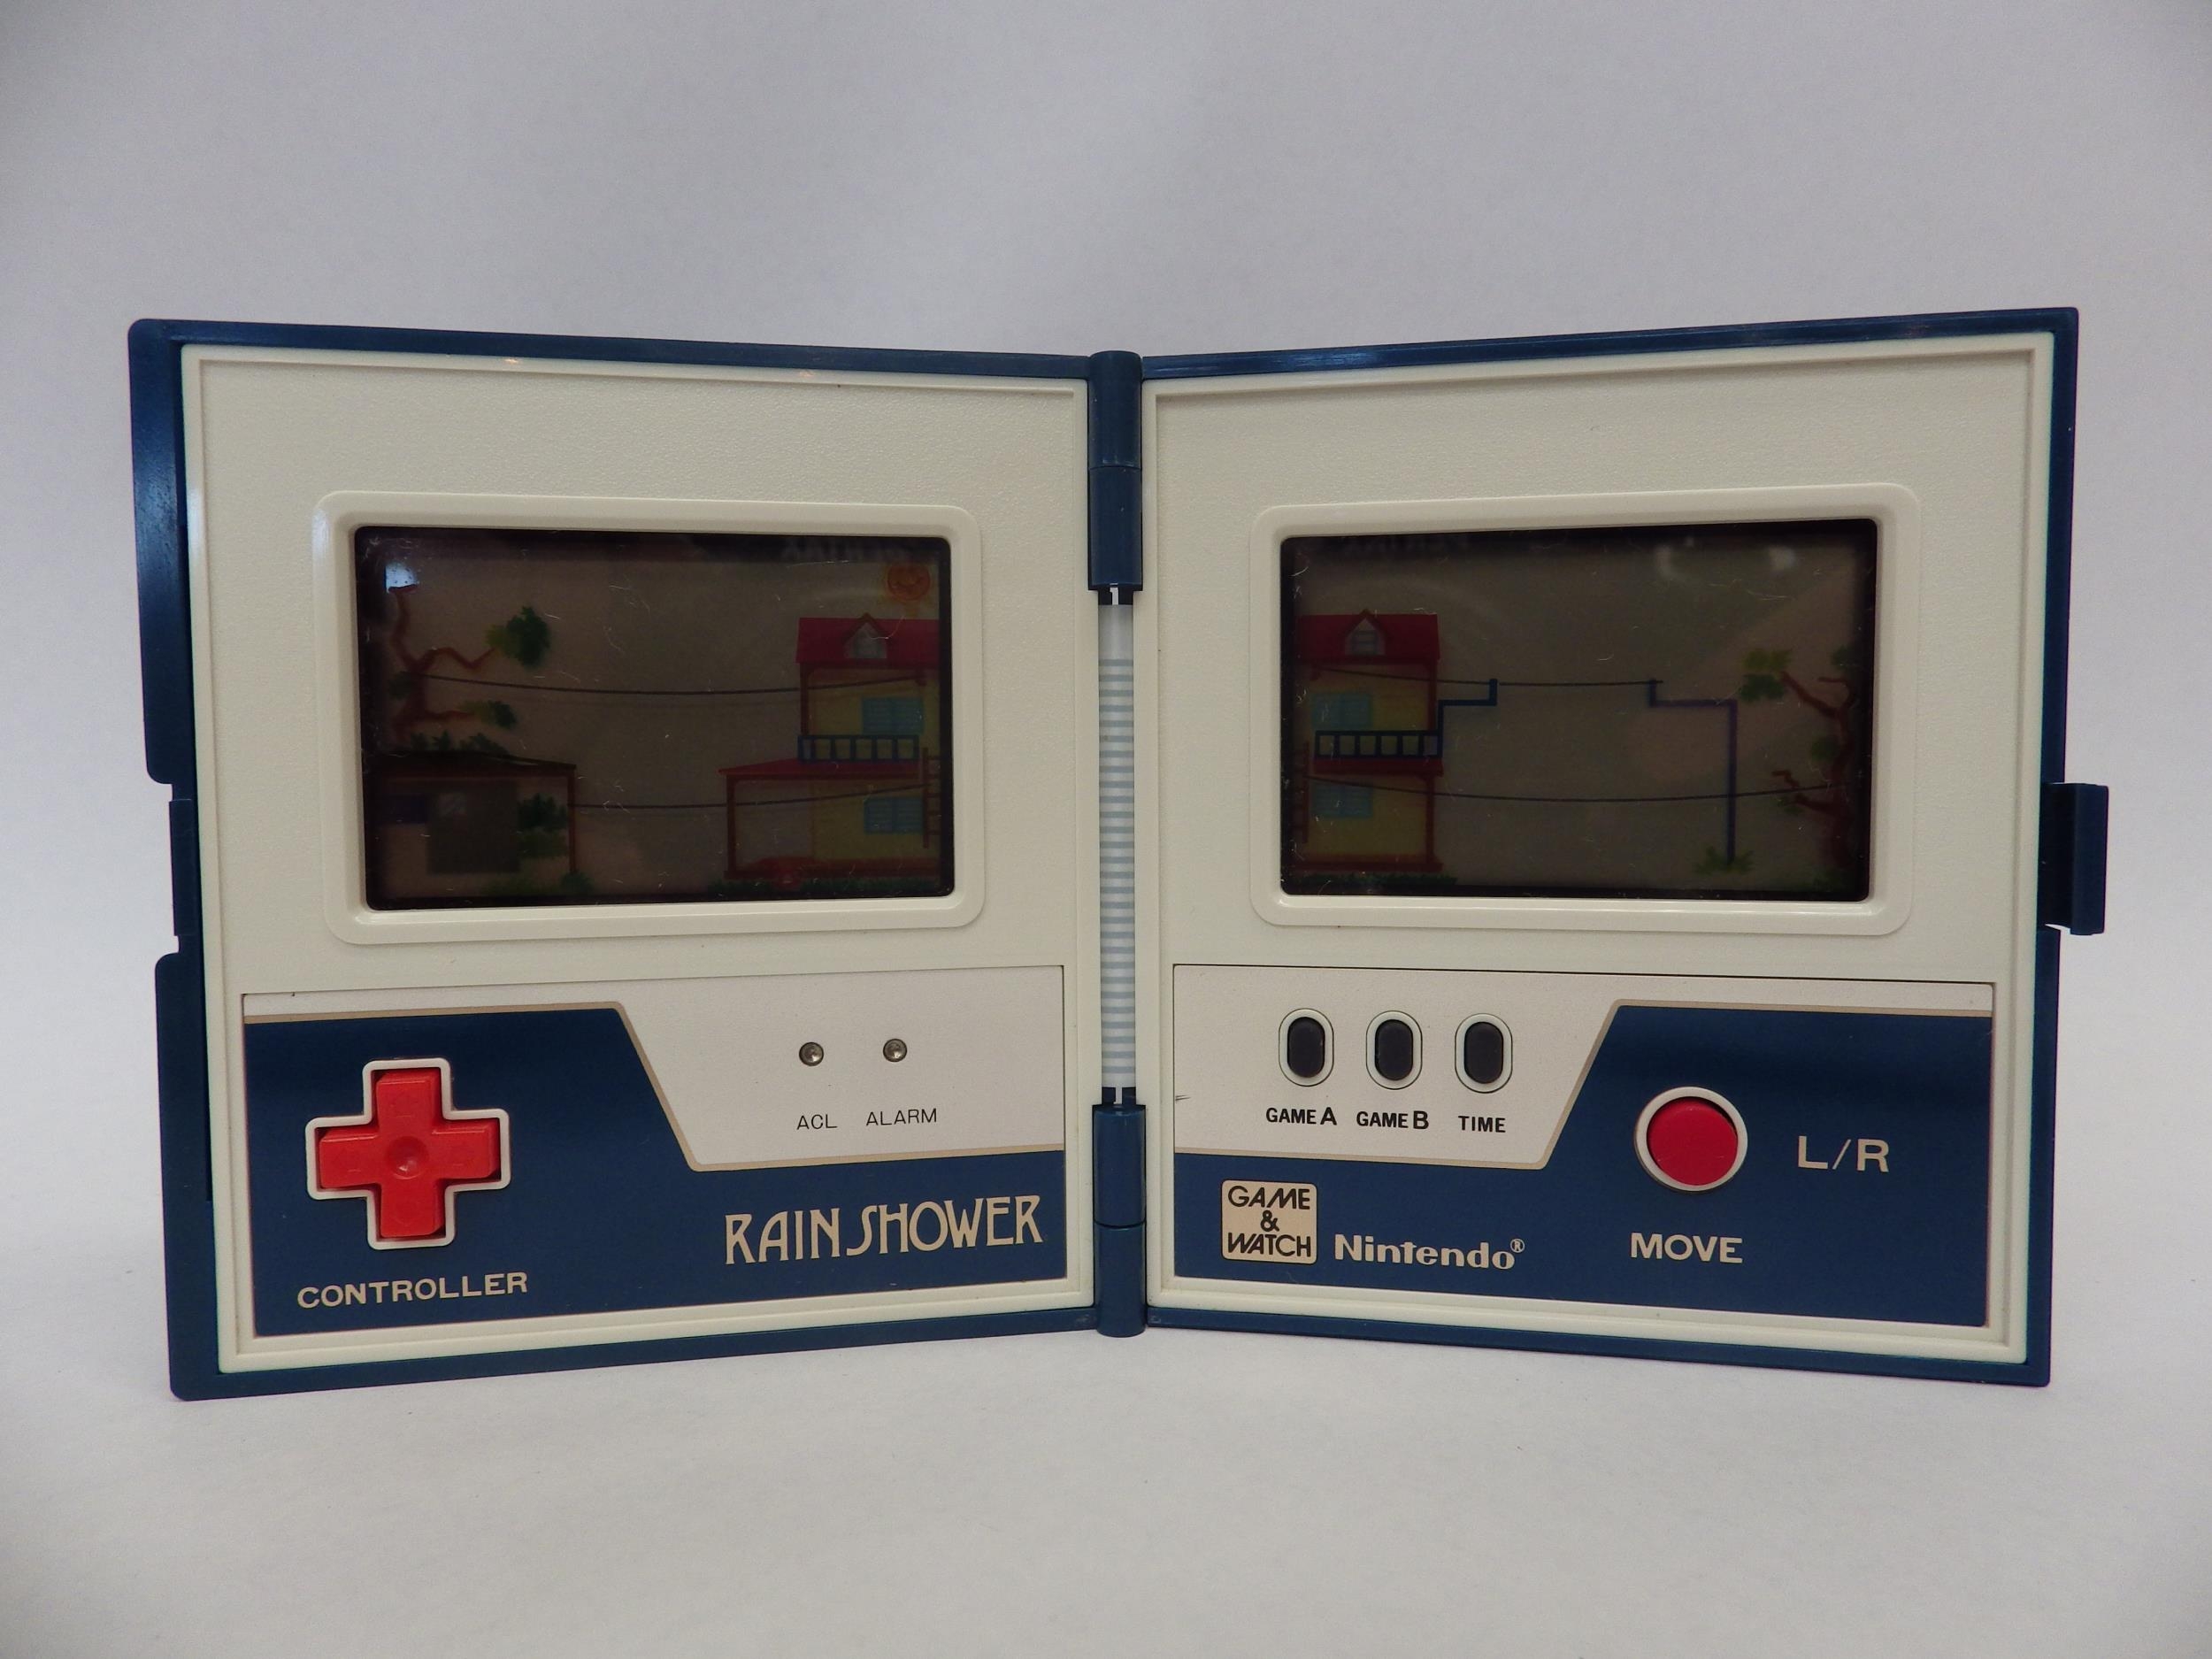 Nintendo Game & Watch Multi Screen Rain Shower handheld electronic game (LP-57) in original box - Image 2 of 5